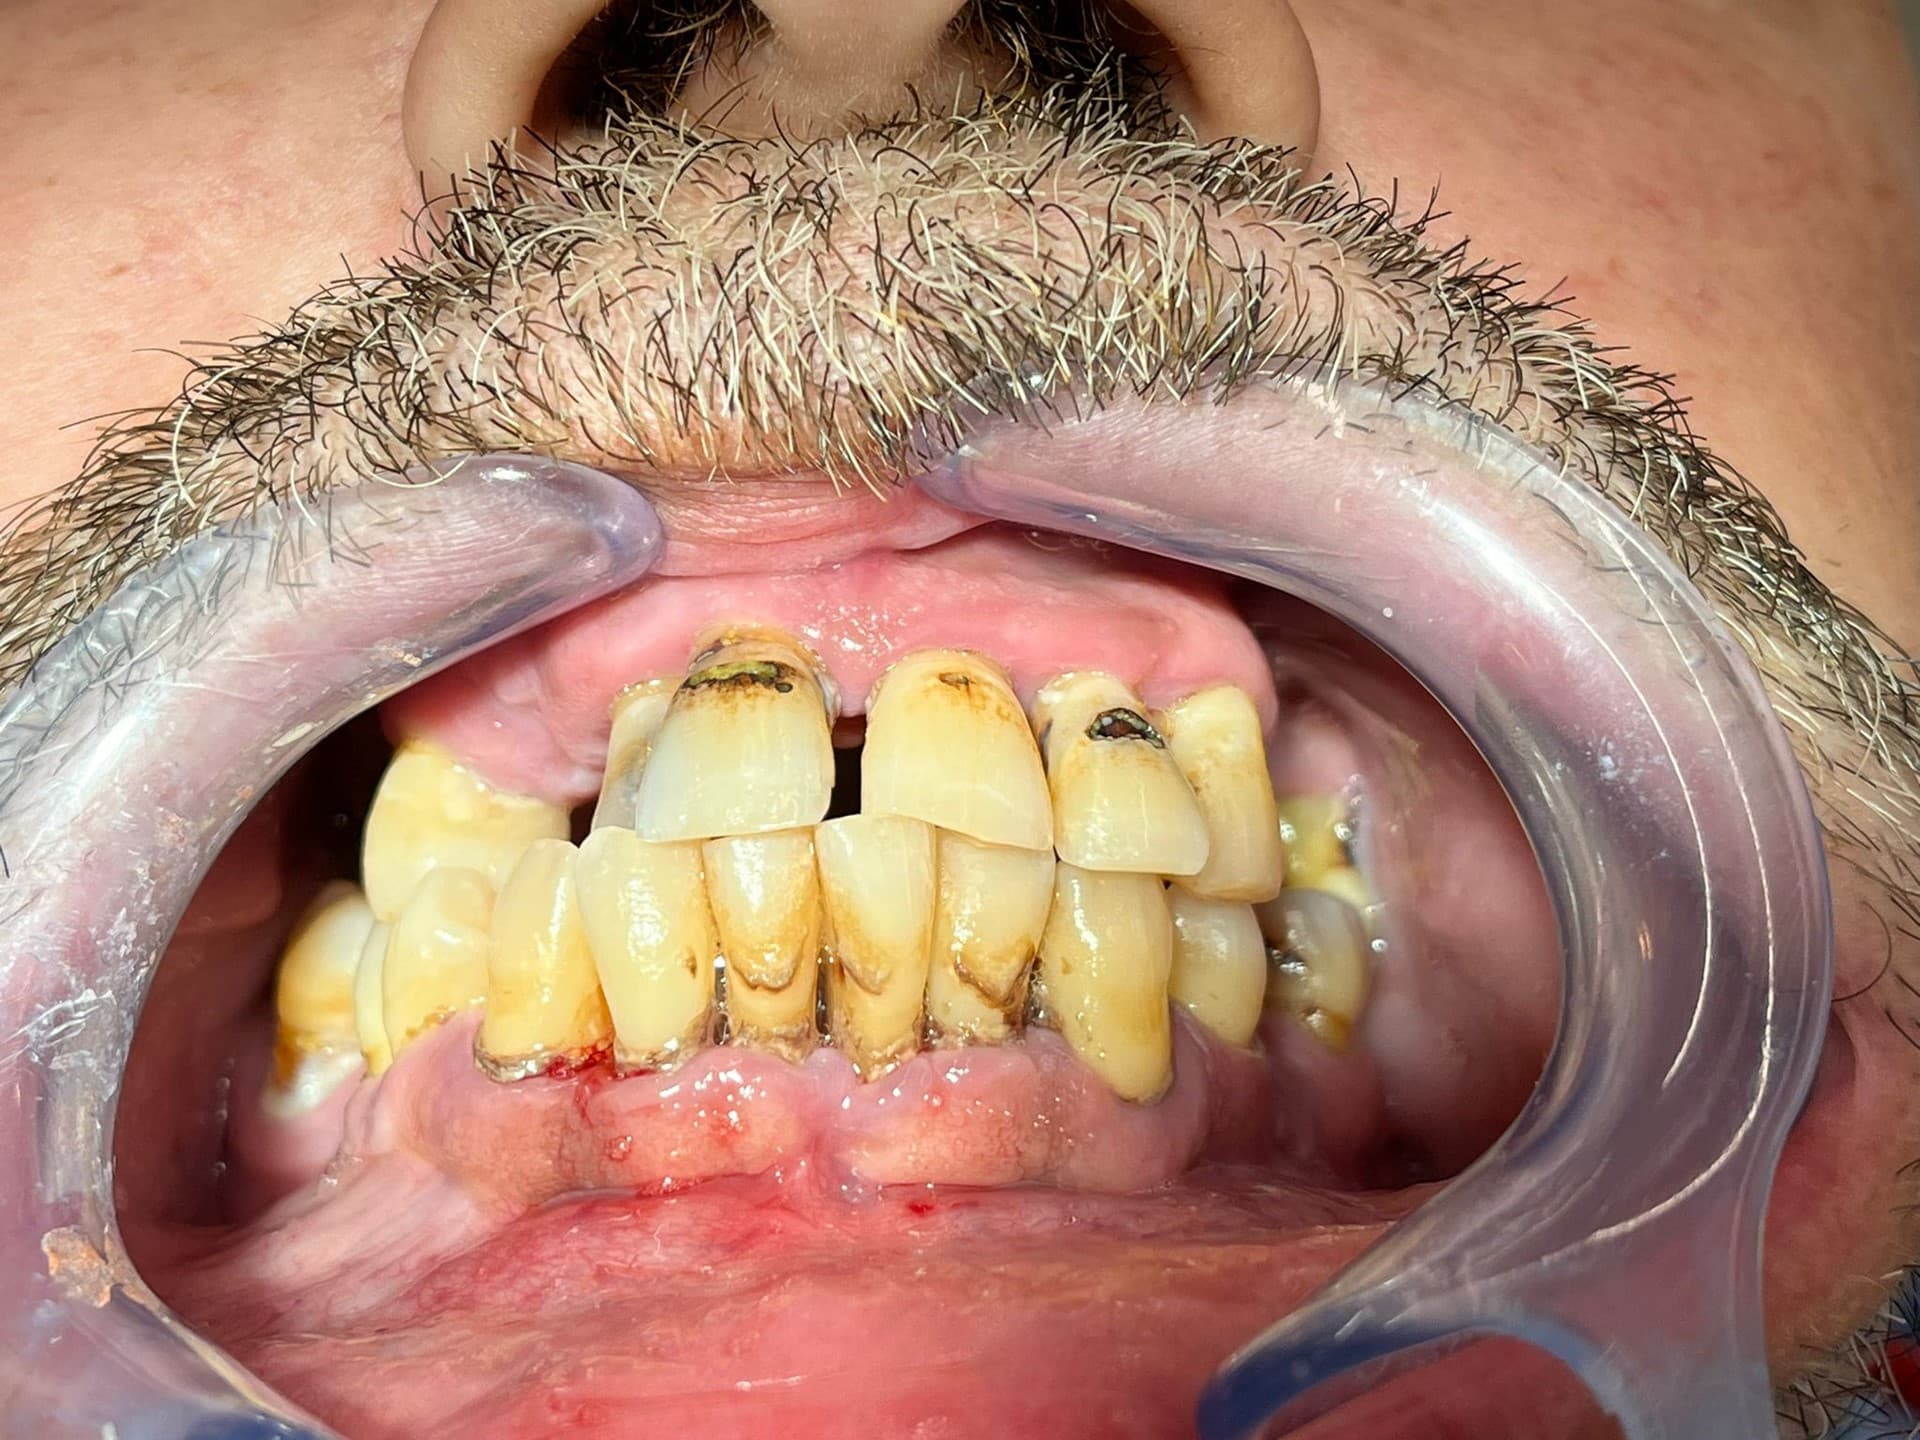 Implante dental en Vigo